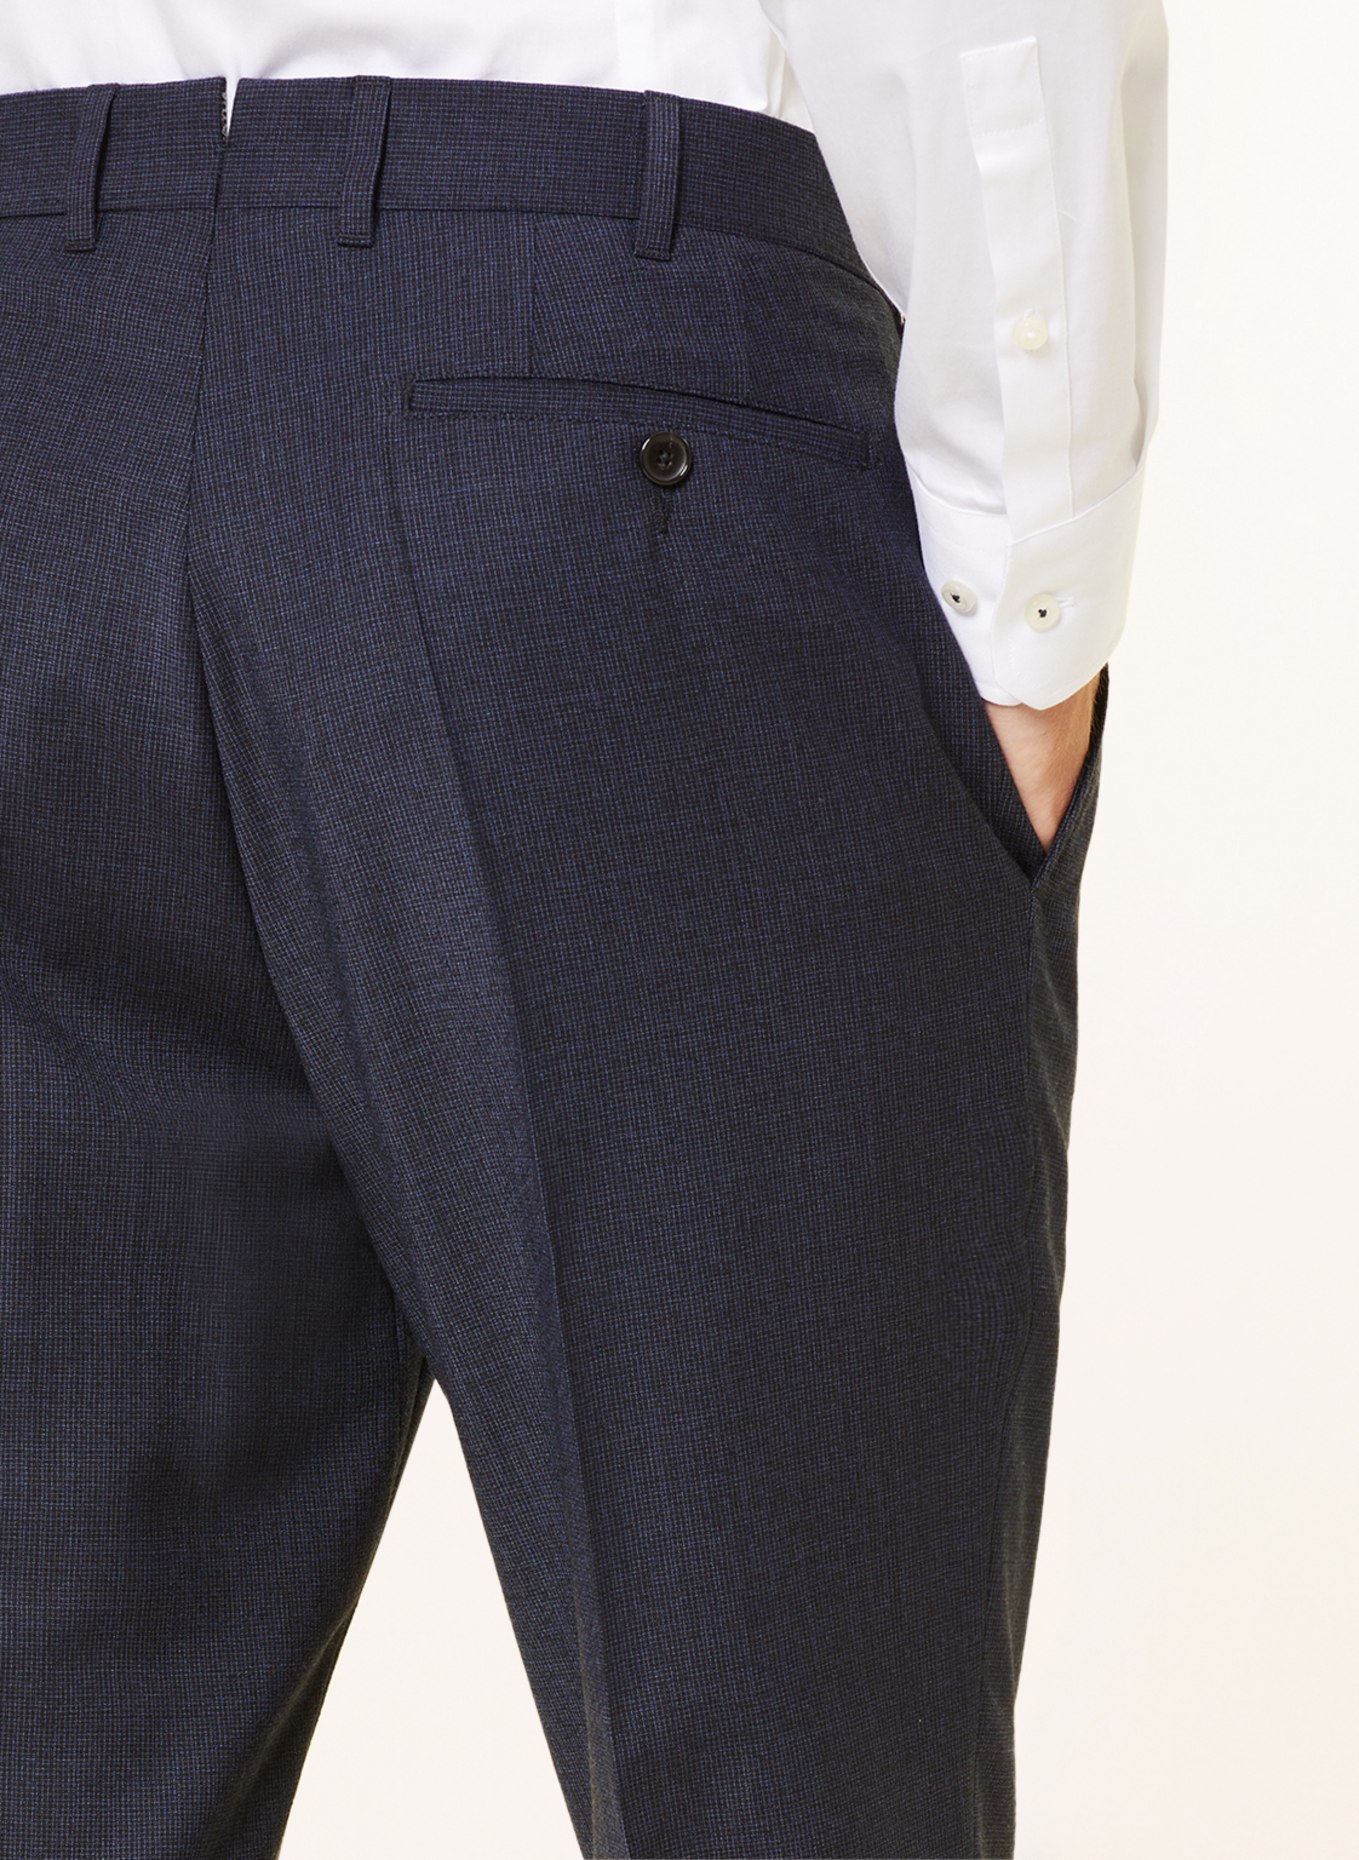 EDUARD DRESSLER Anzughose Shaped Fit, Farbe: 047 DUNKELBLAU (Bild 6)